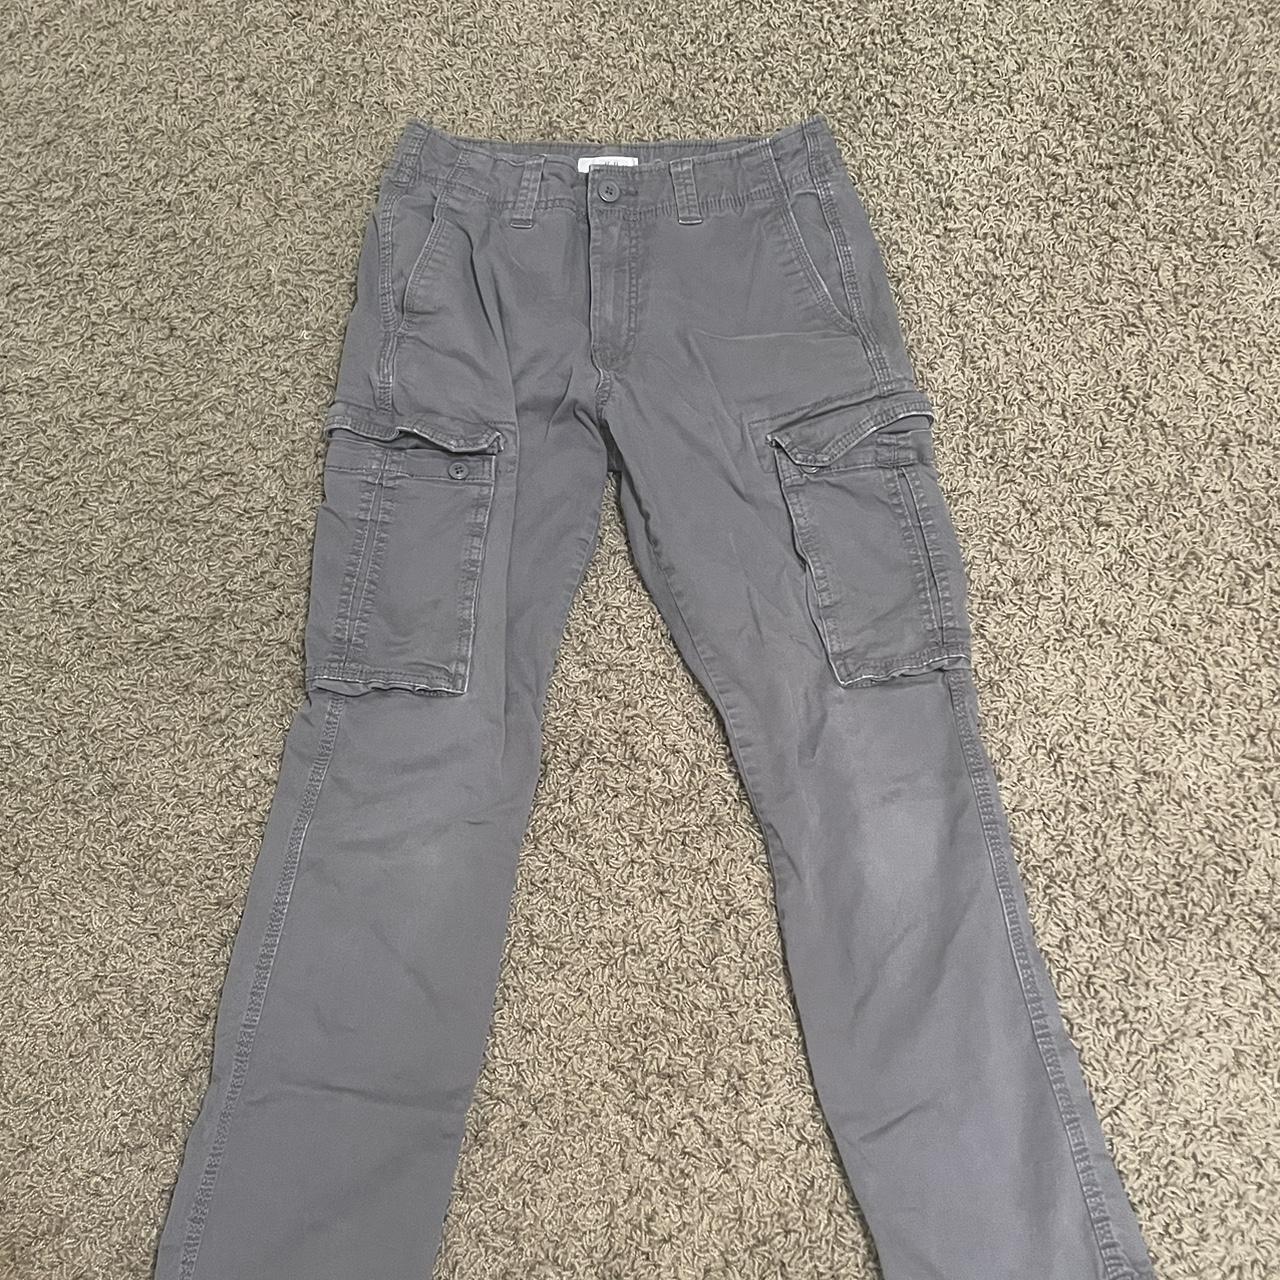 Goodfellow grey cargo pants size “30” #Cargo #Pants... - Depop